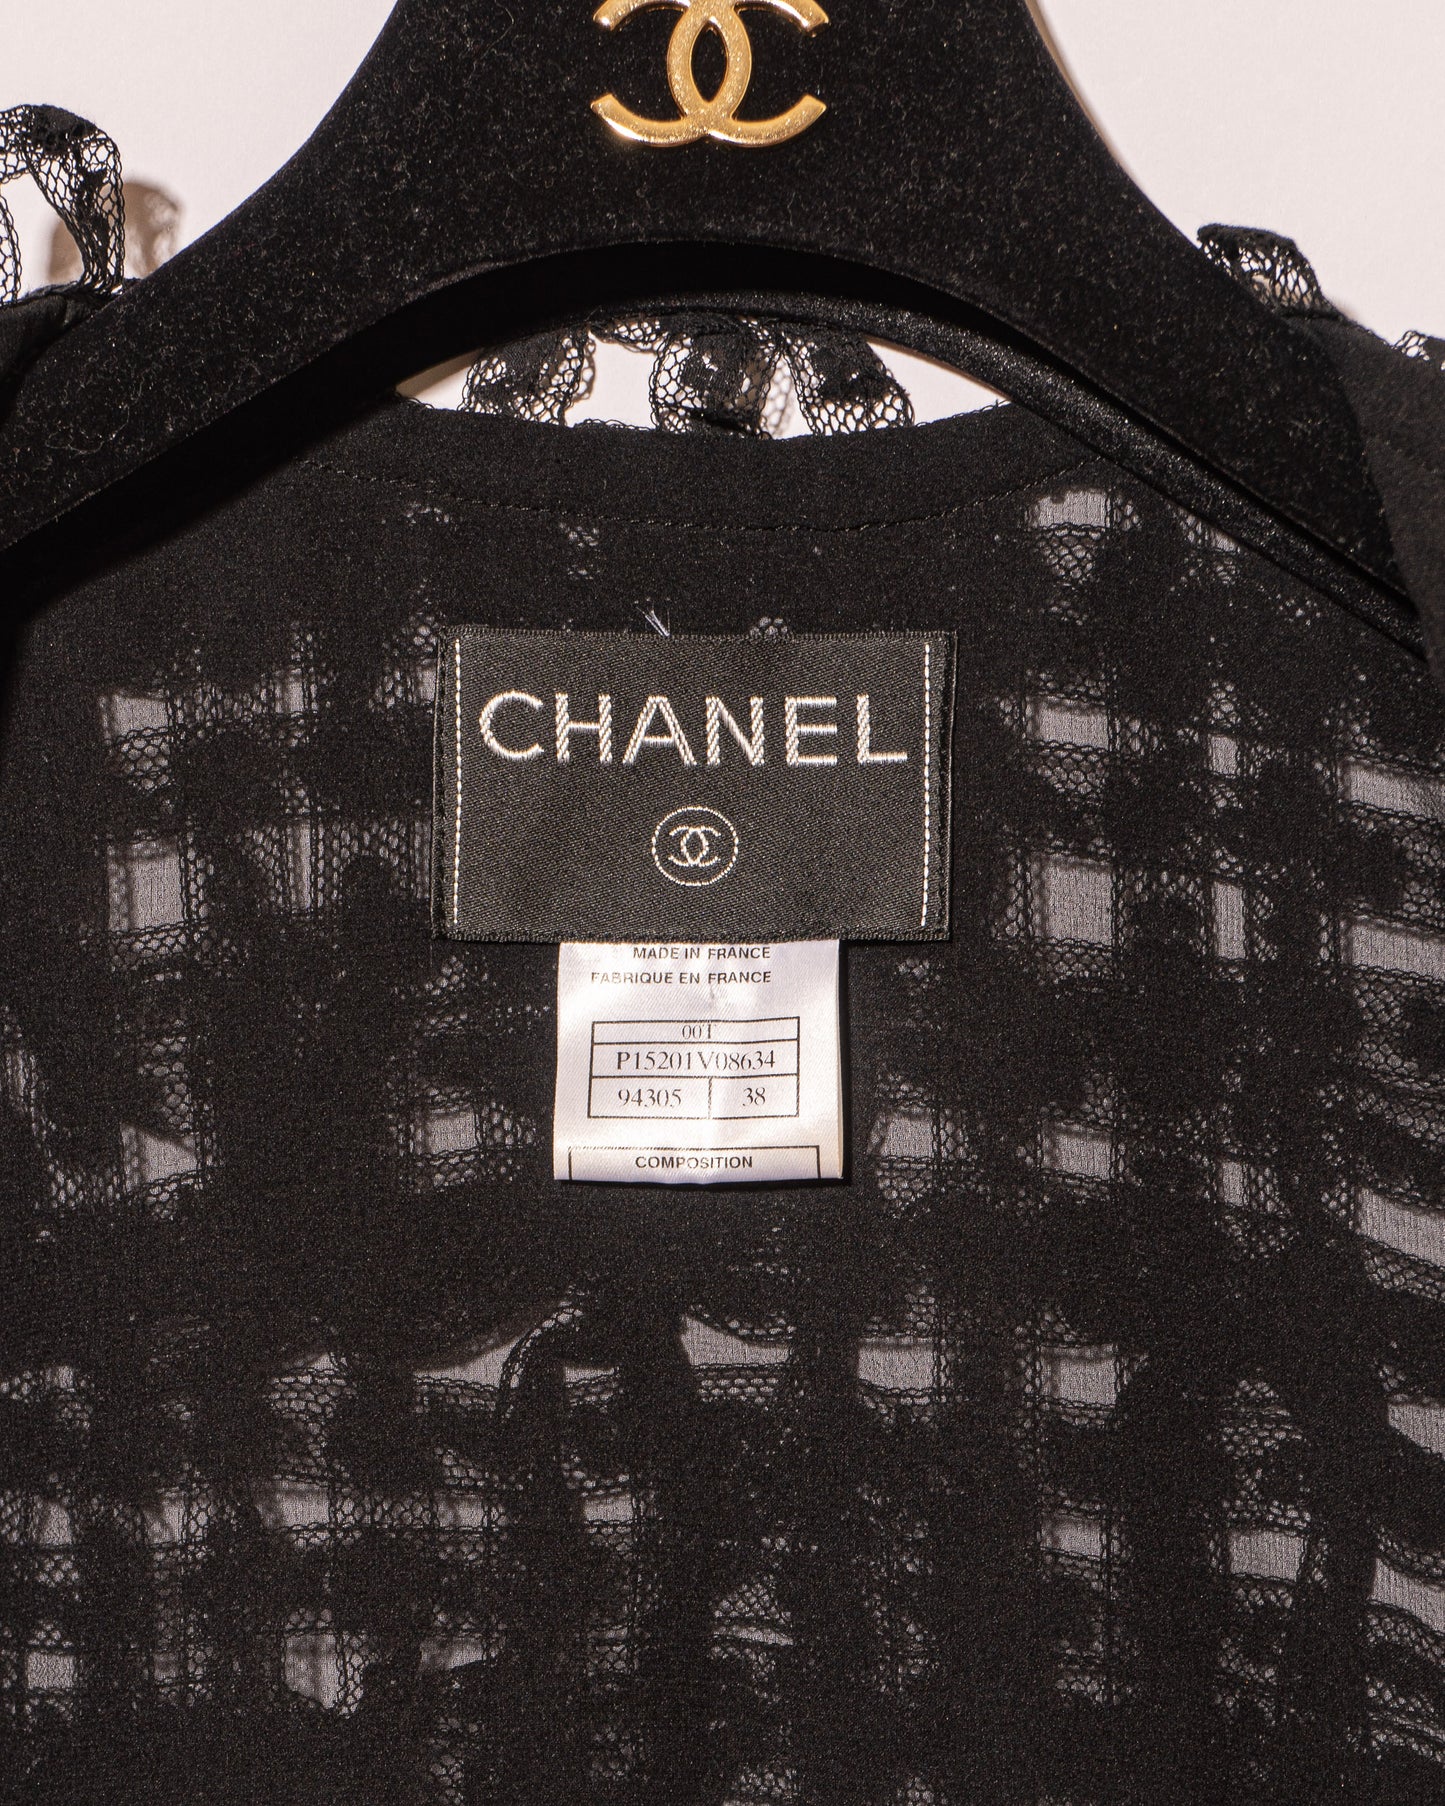 FR36-38 Chanel Cruise 2000 Collarless Black Floral Lace Ribbon Tweed Jacket